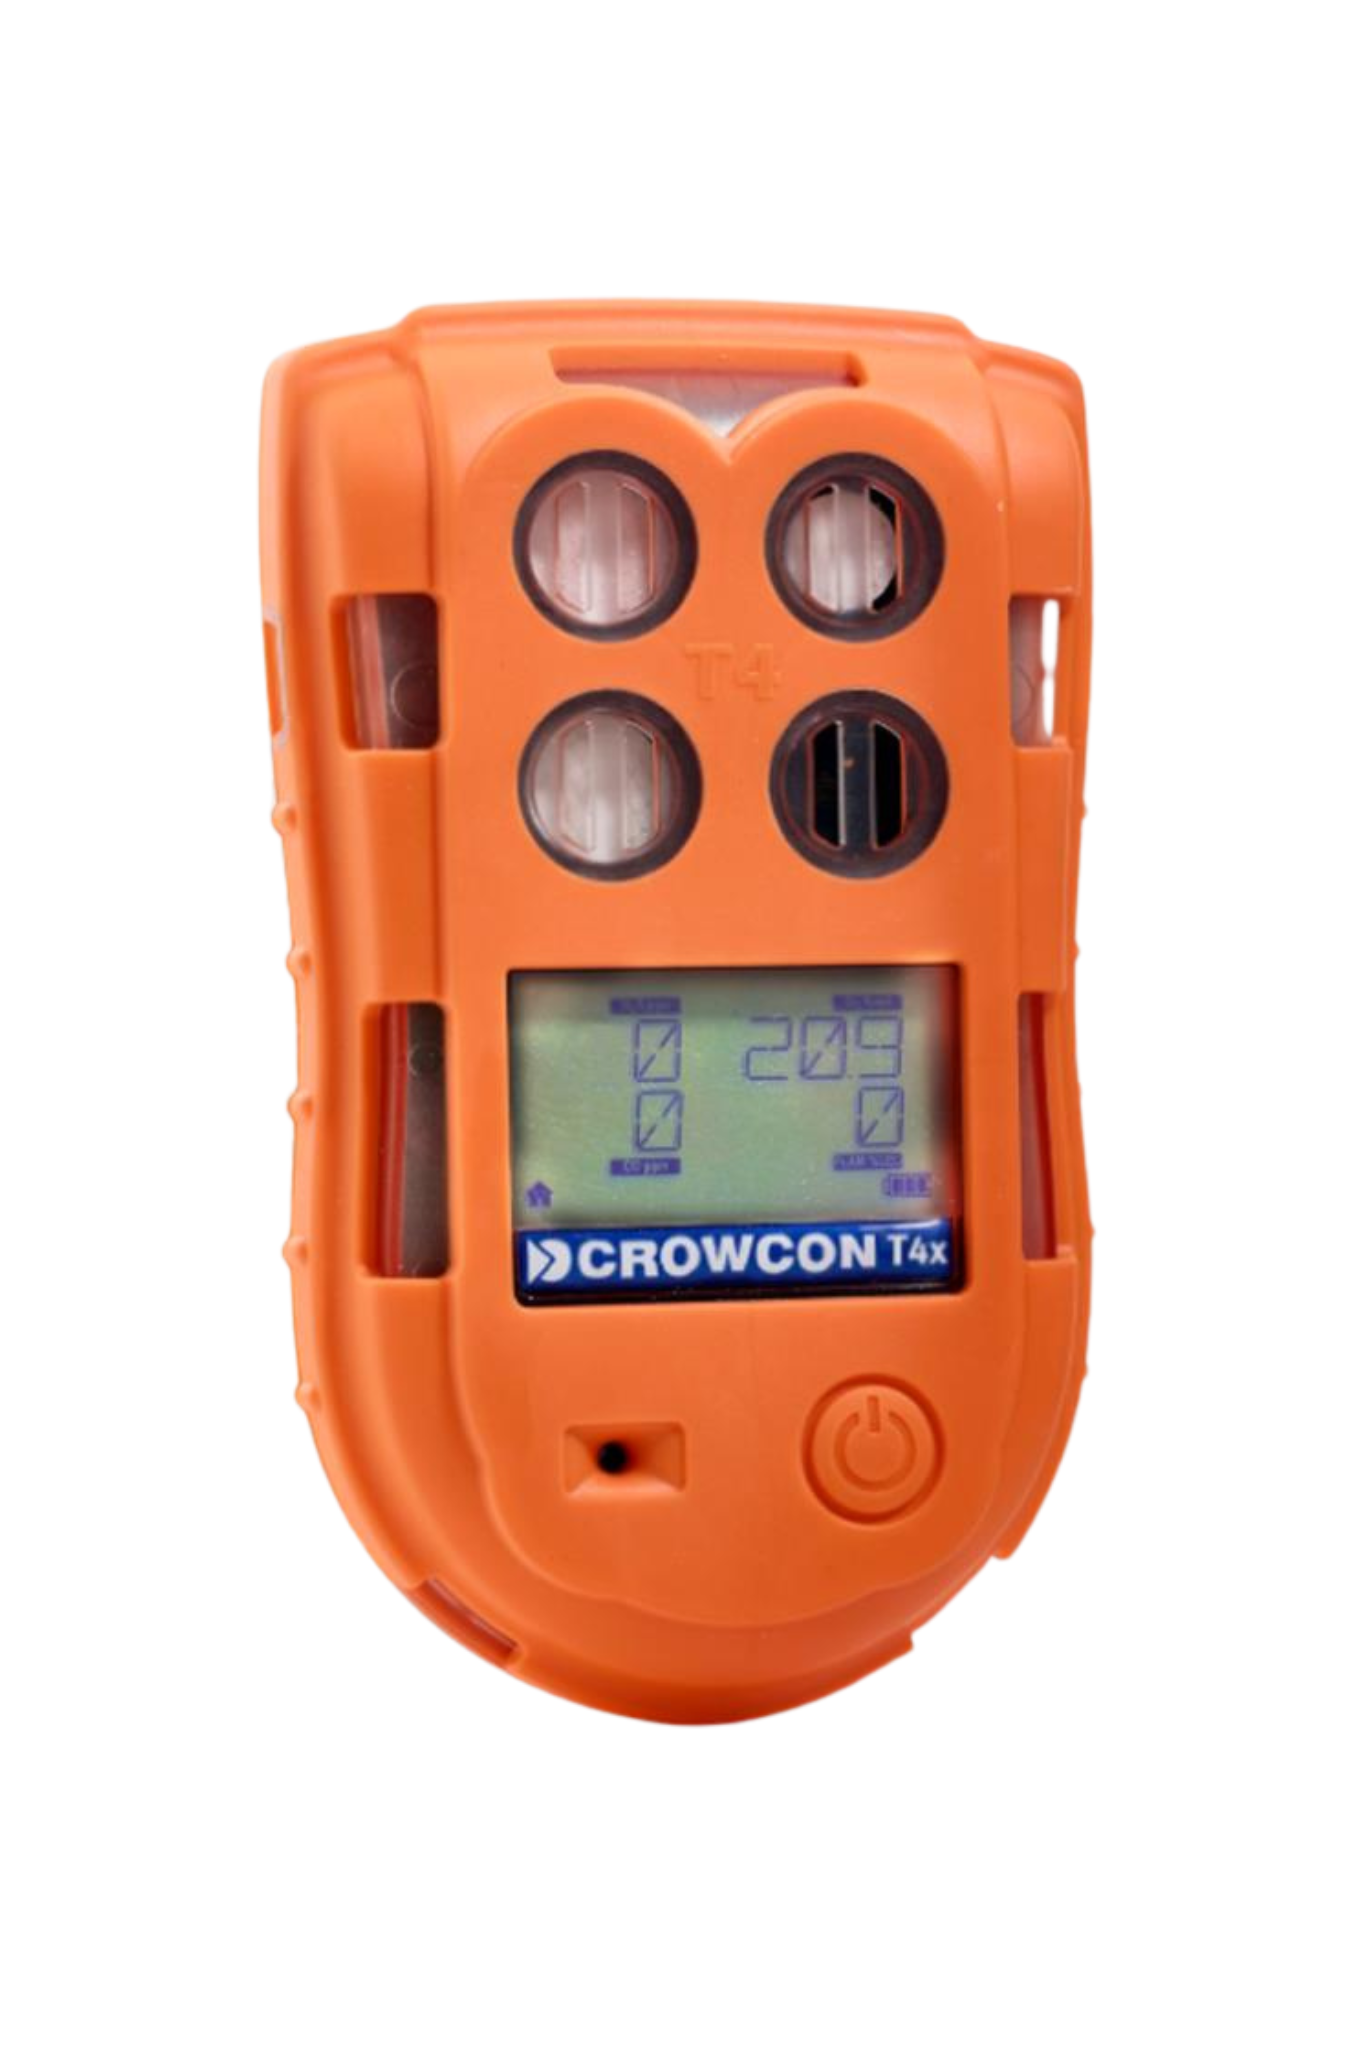 T4x portables Crowcon Sensitron